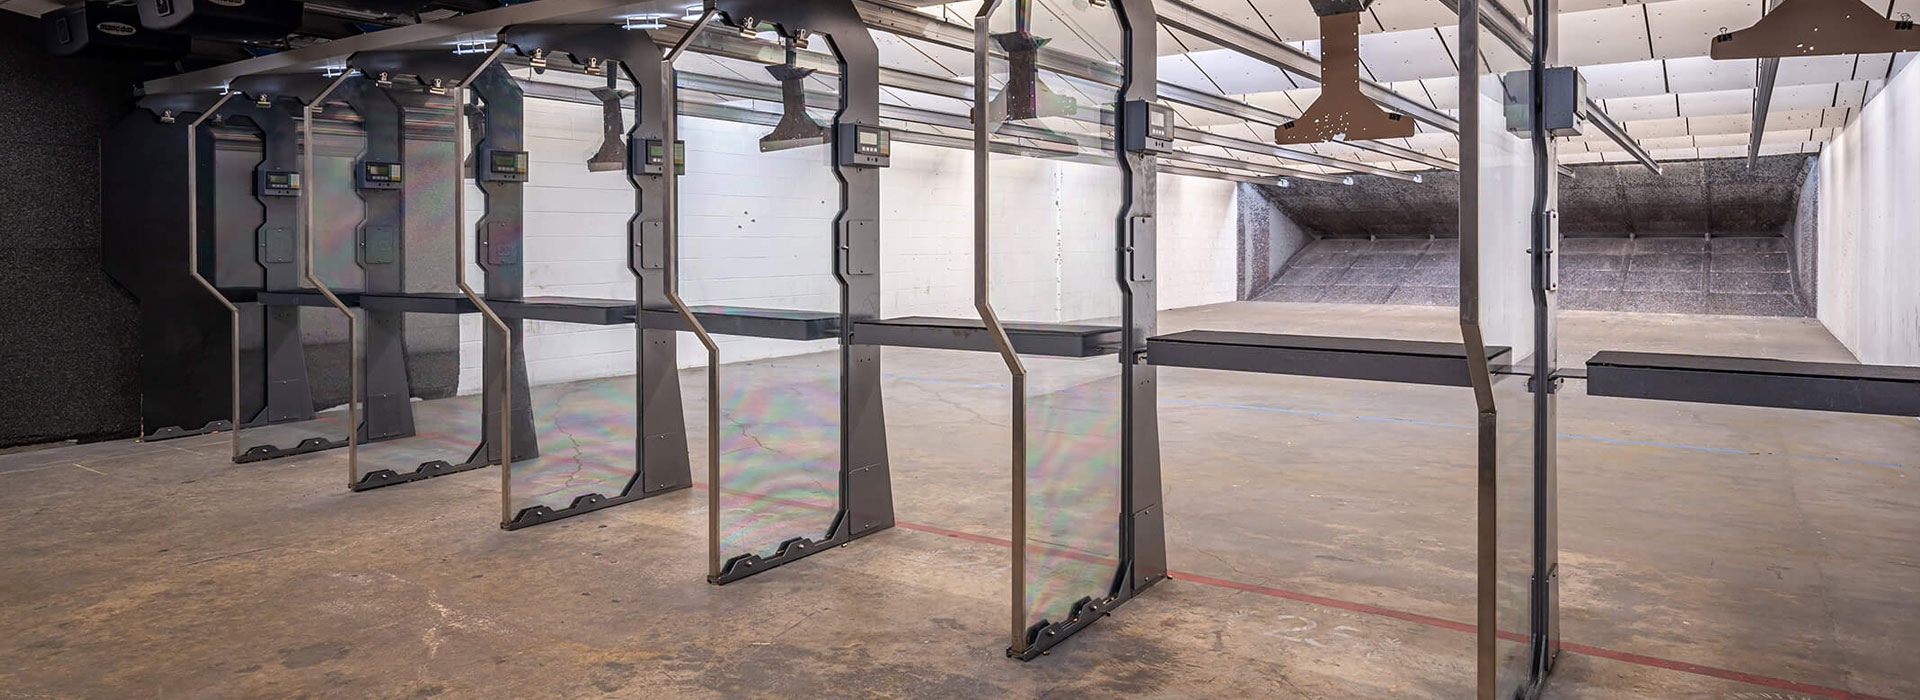 Houston's Largest Indoor Shooting Range